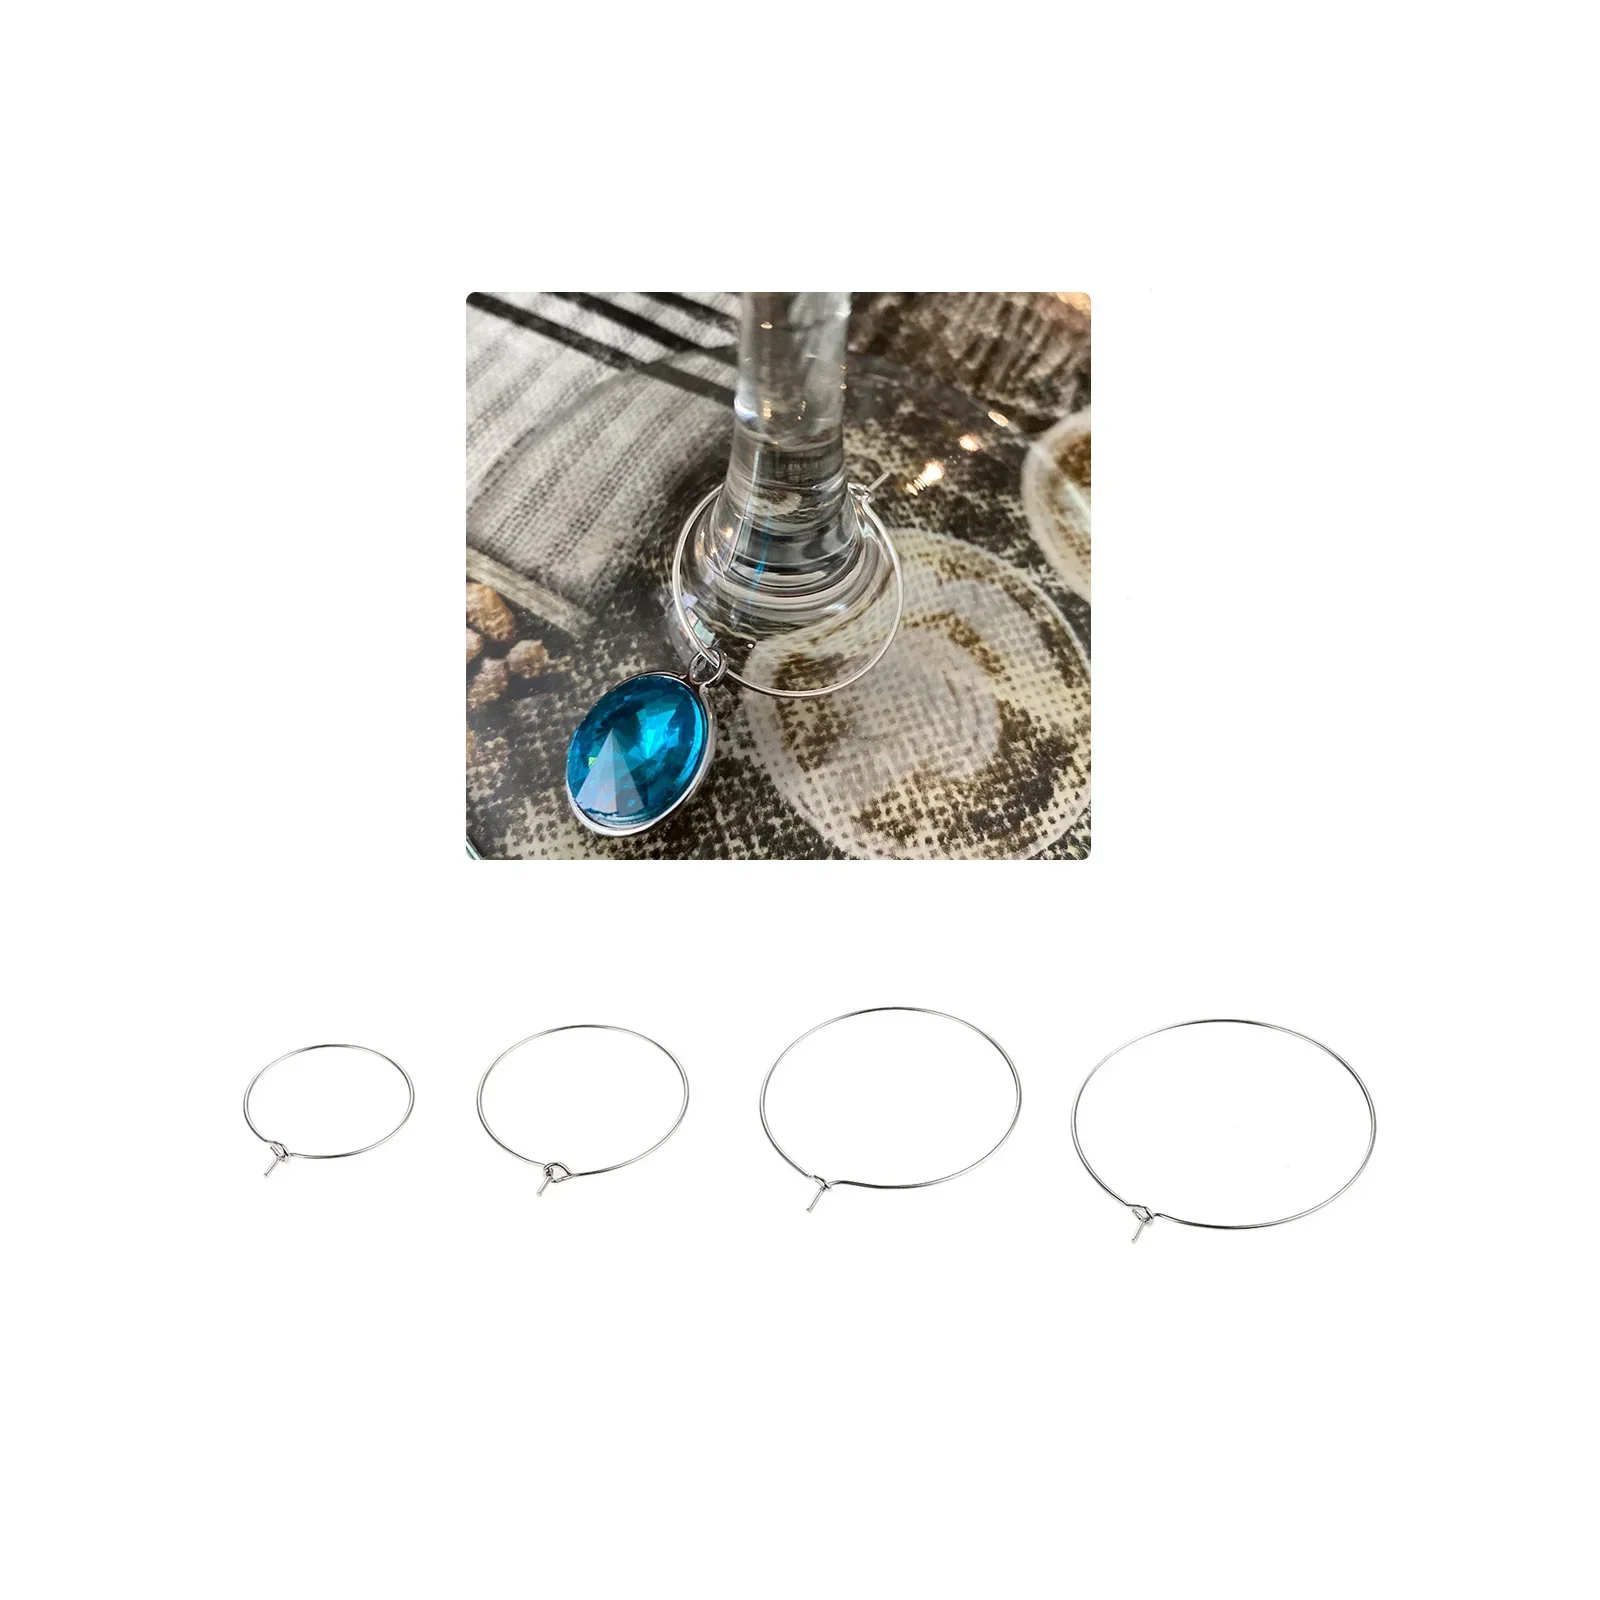 100pcs/lot Wine Glass Charm Rings Earring Hoops Metal Wire Hoops Earrings  Drink Markers Diy Party - Jewelry Findings & Components - AliExpress